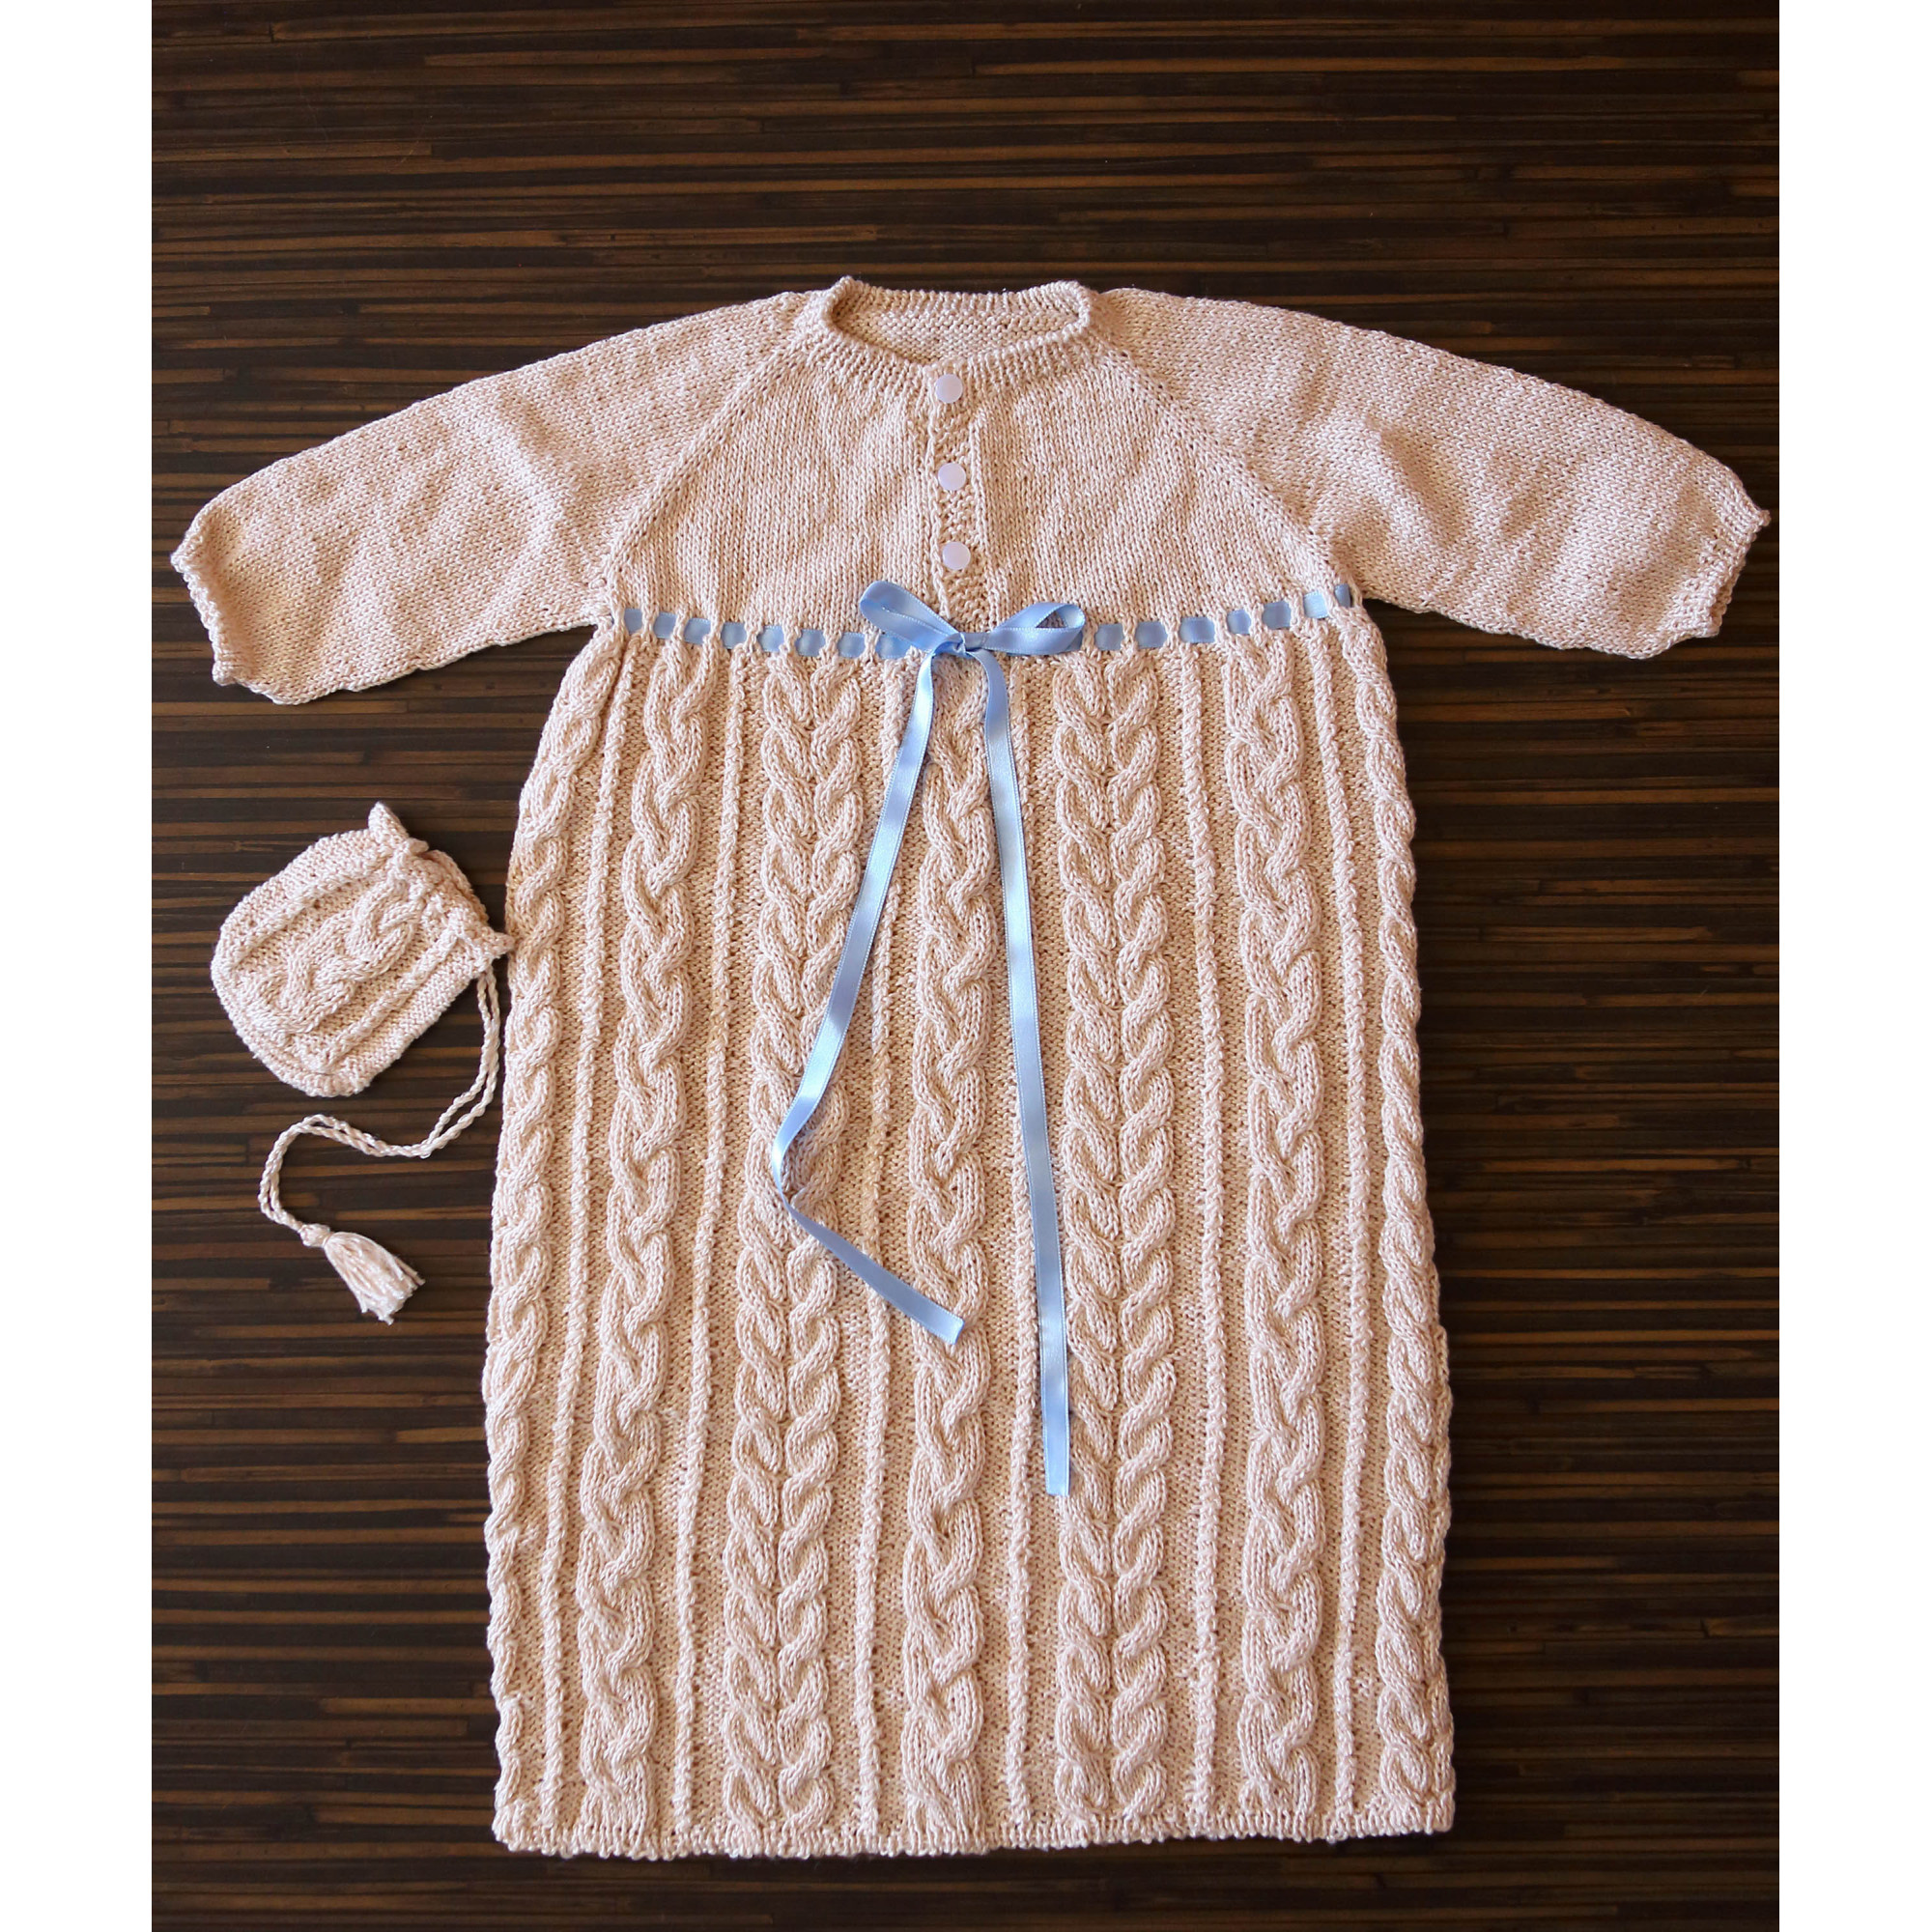 Vintage Knit Dress Cable Knit Dress Infant’s Dress